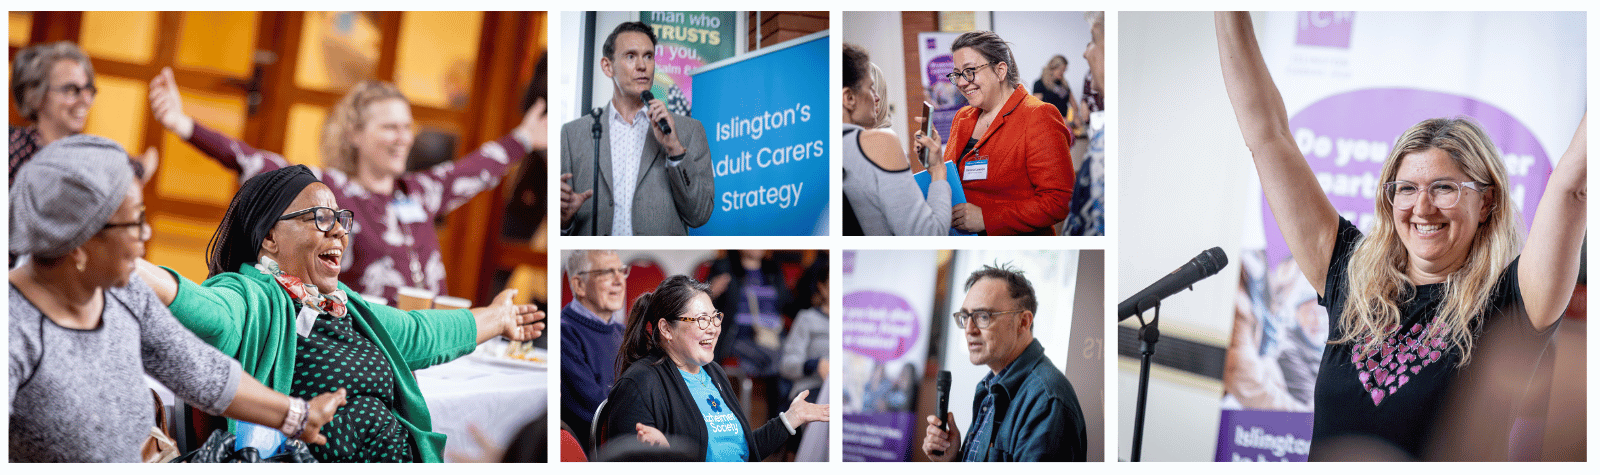 Islington Adults Carers Strategy Launch